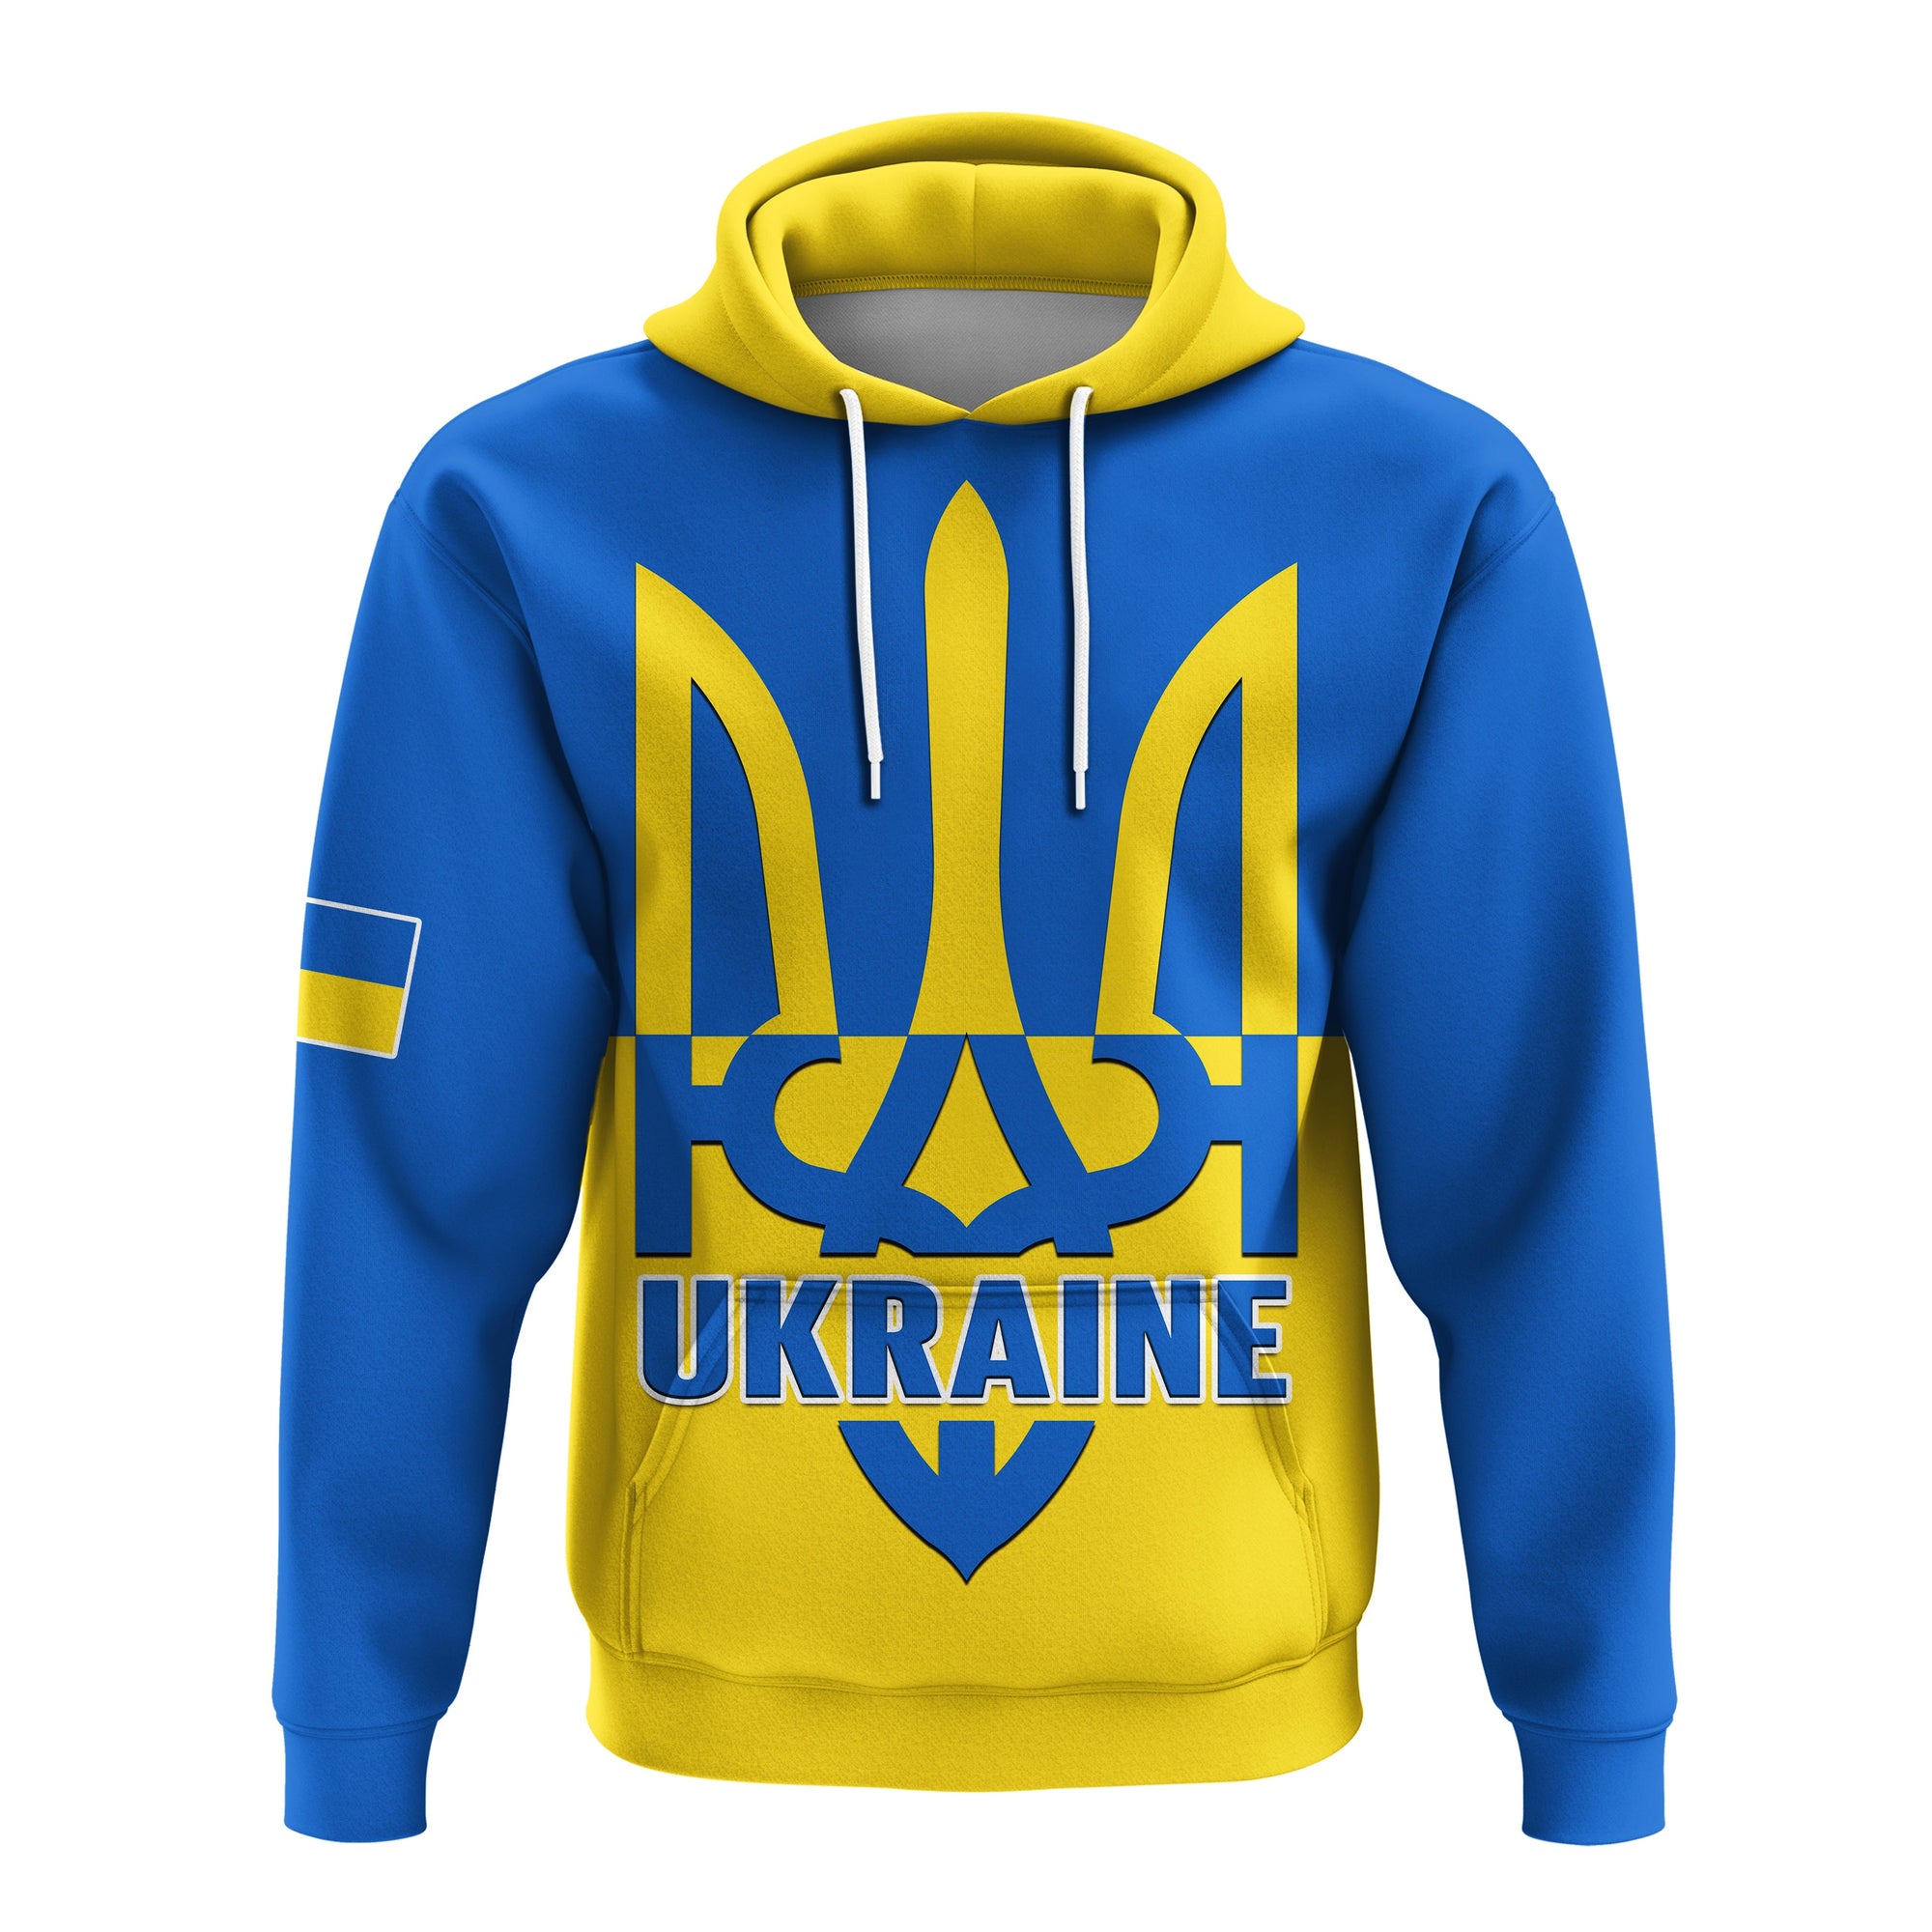 ukraine-hoodie-stand-with-ukrainian-simple-style